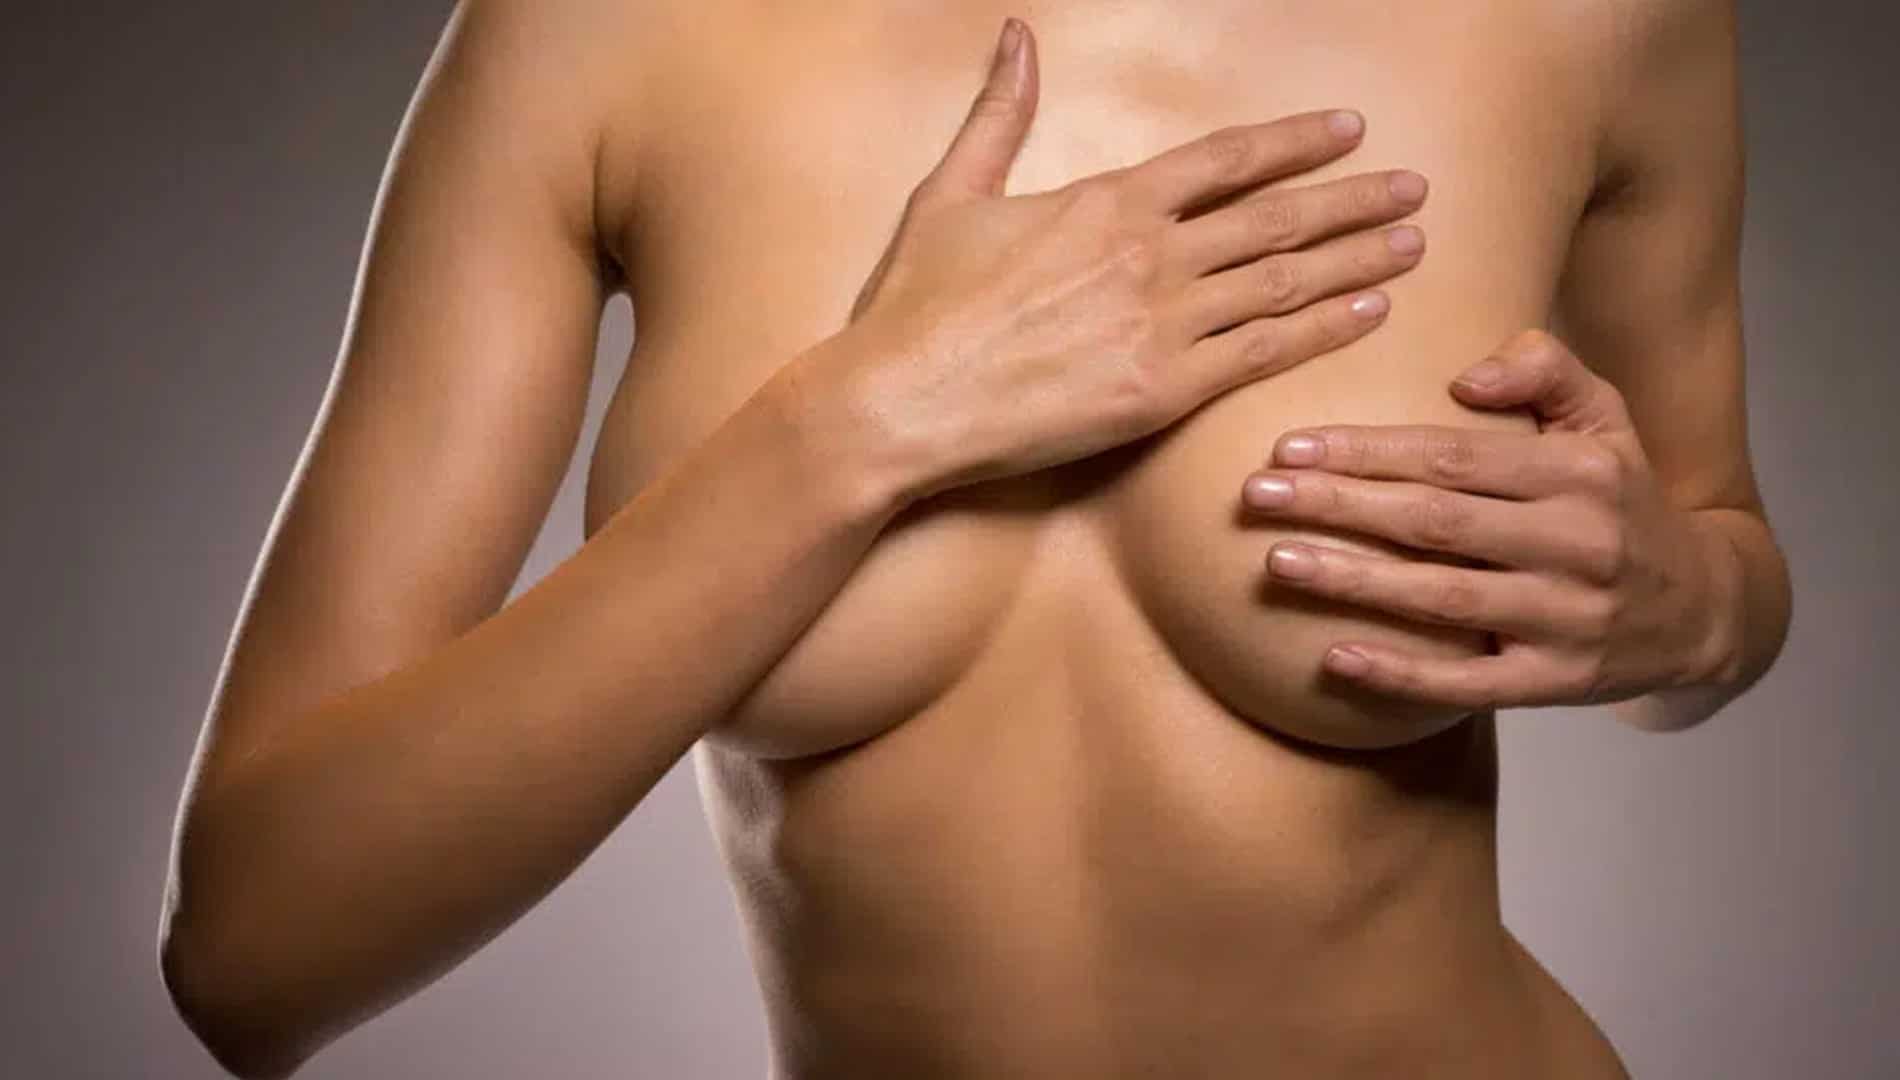 augmentation mammaire prothese mammaire chirurgie et medecine esthetique docteur sebastiano montoneri chirurgien esthetique paris 16